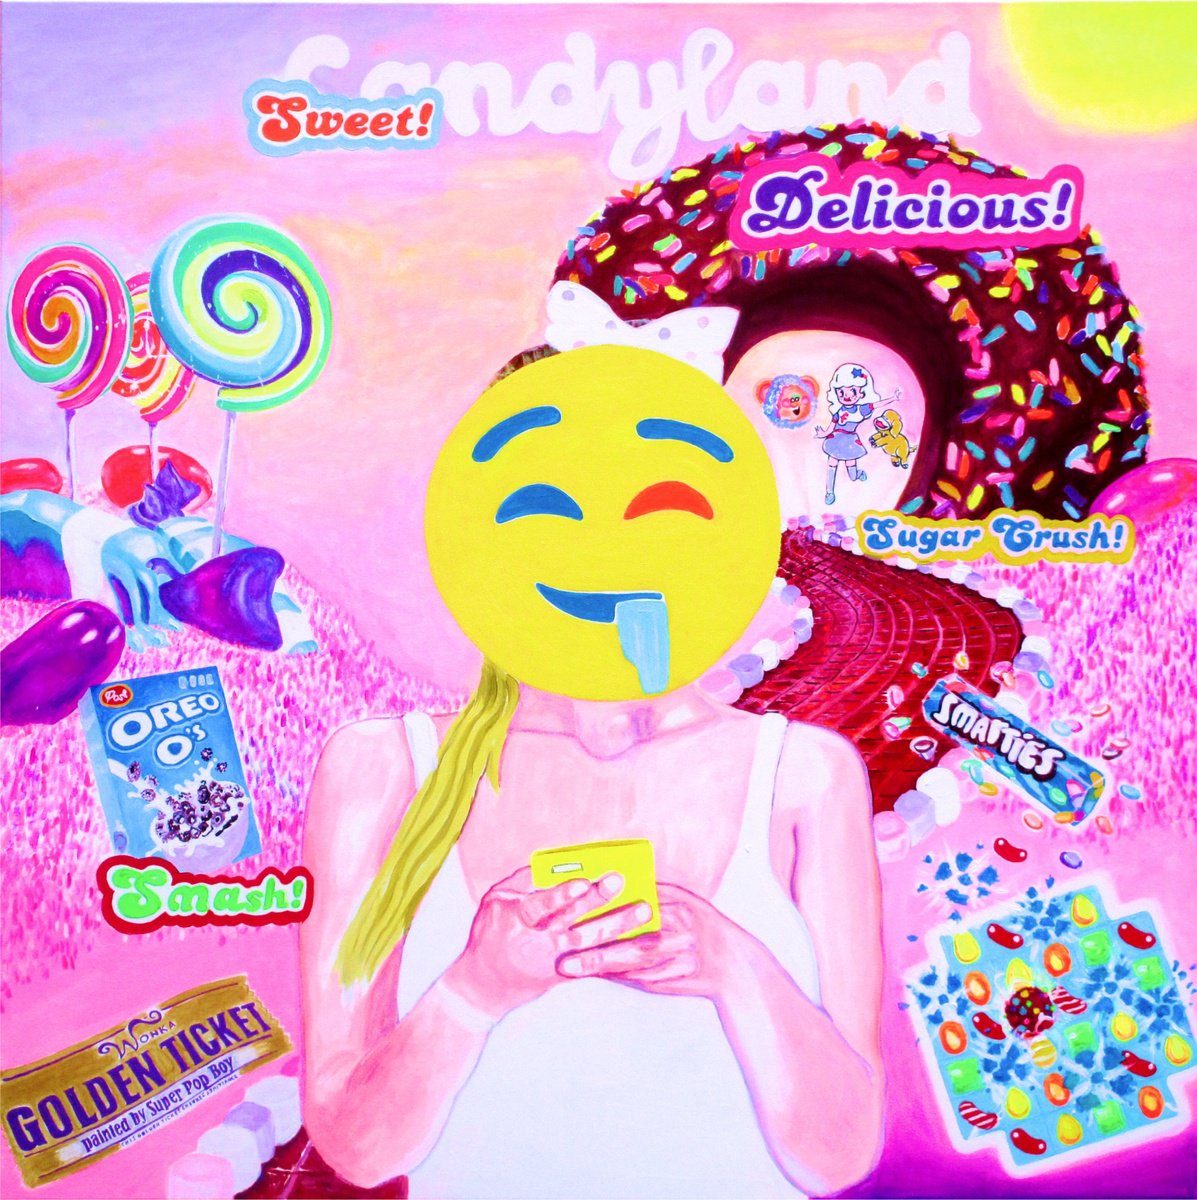 Candyland (Pop Art painting) by SUPER POP BOY